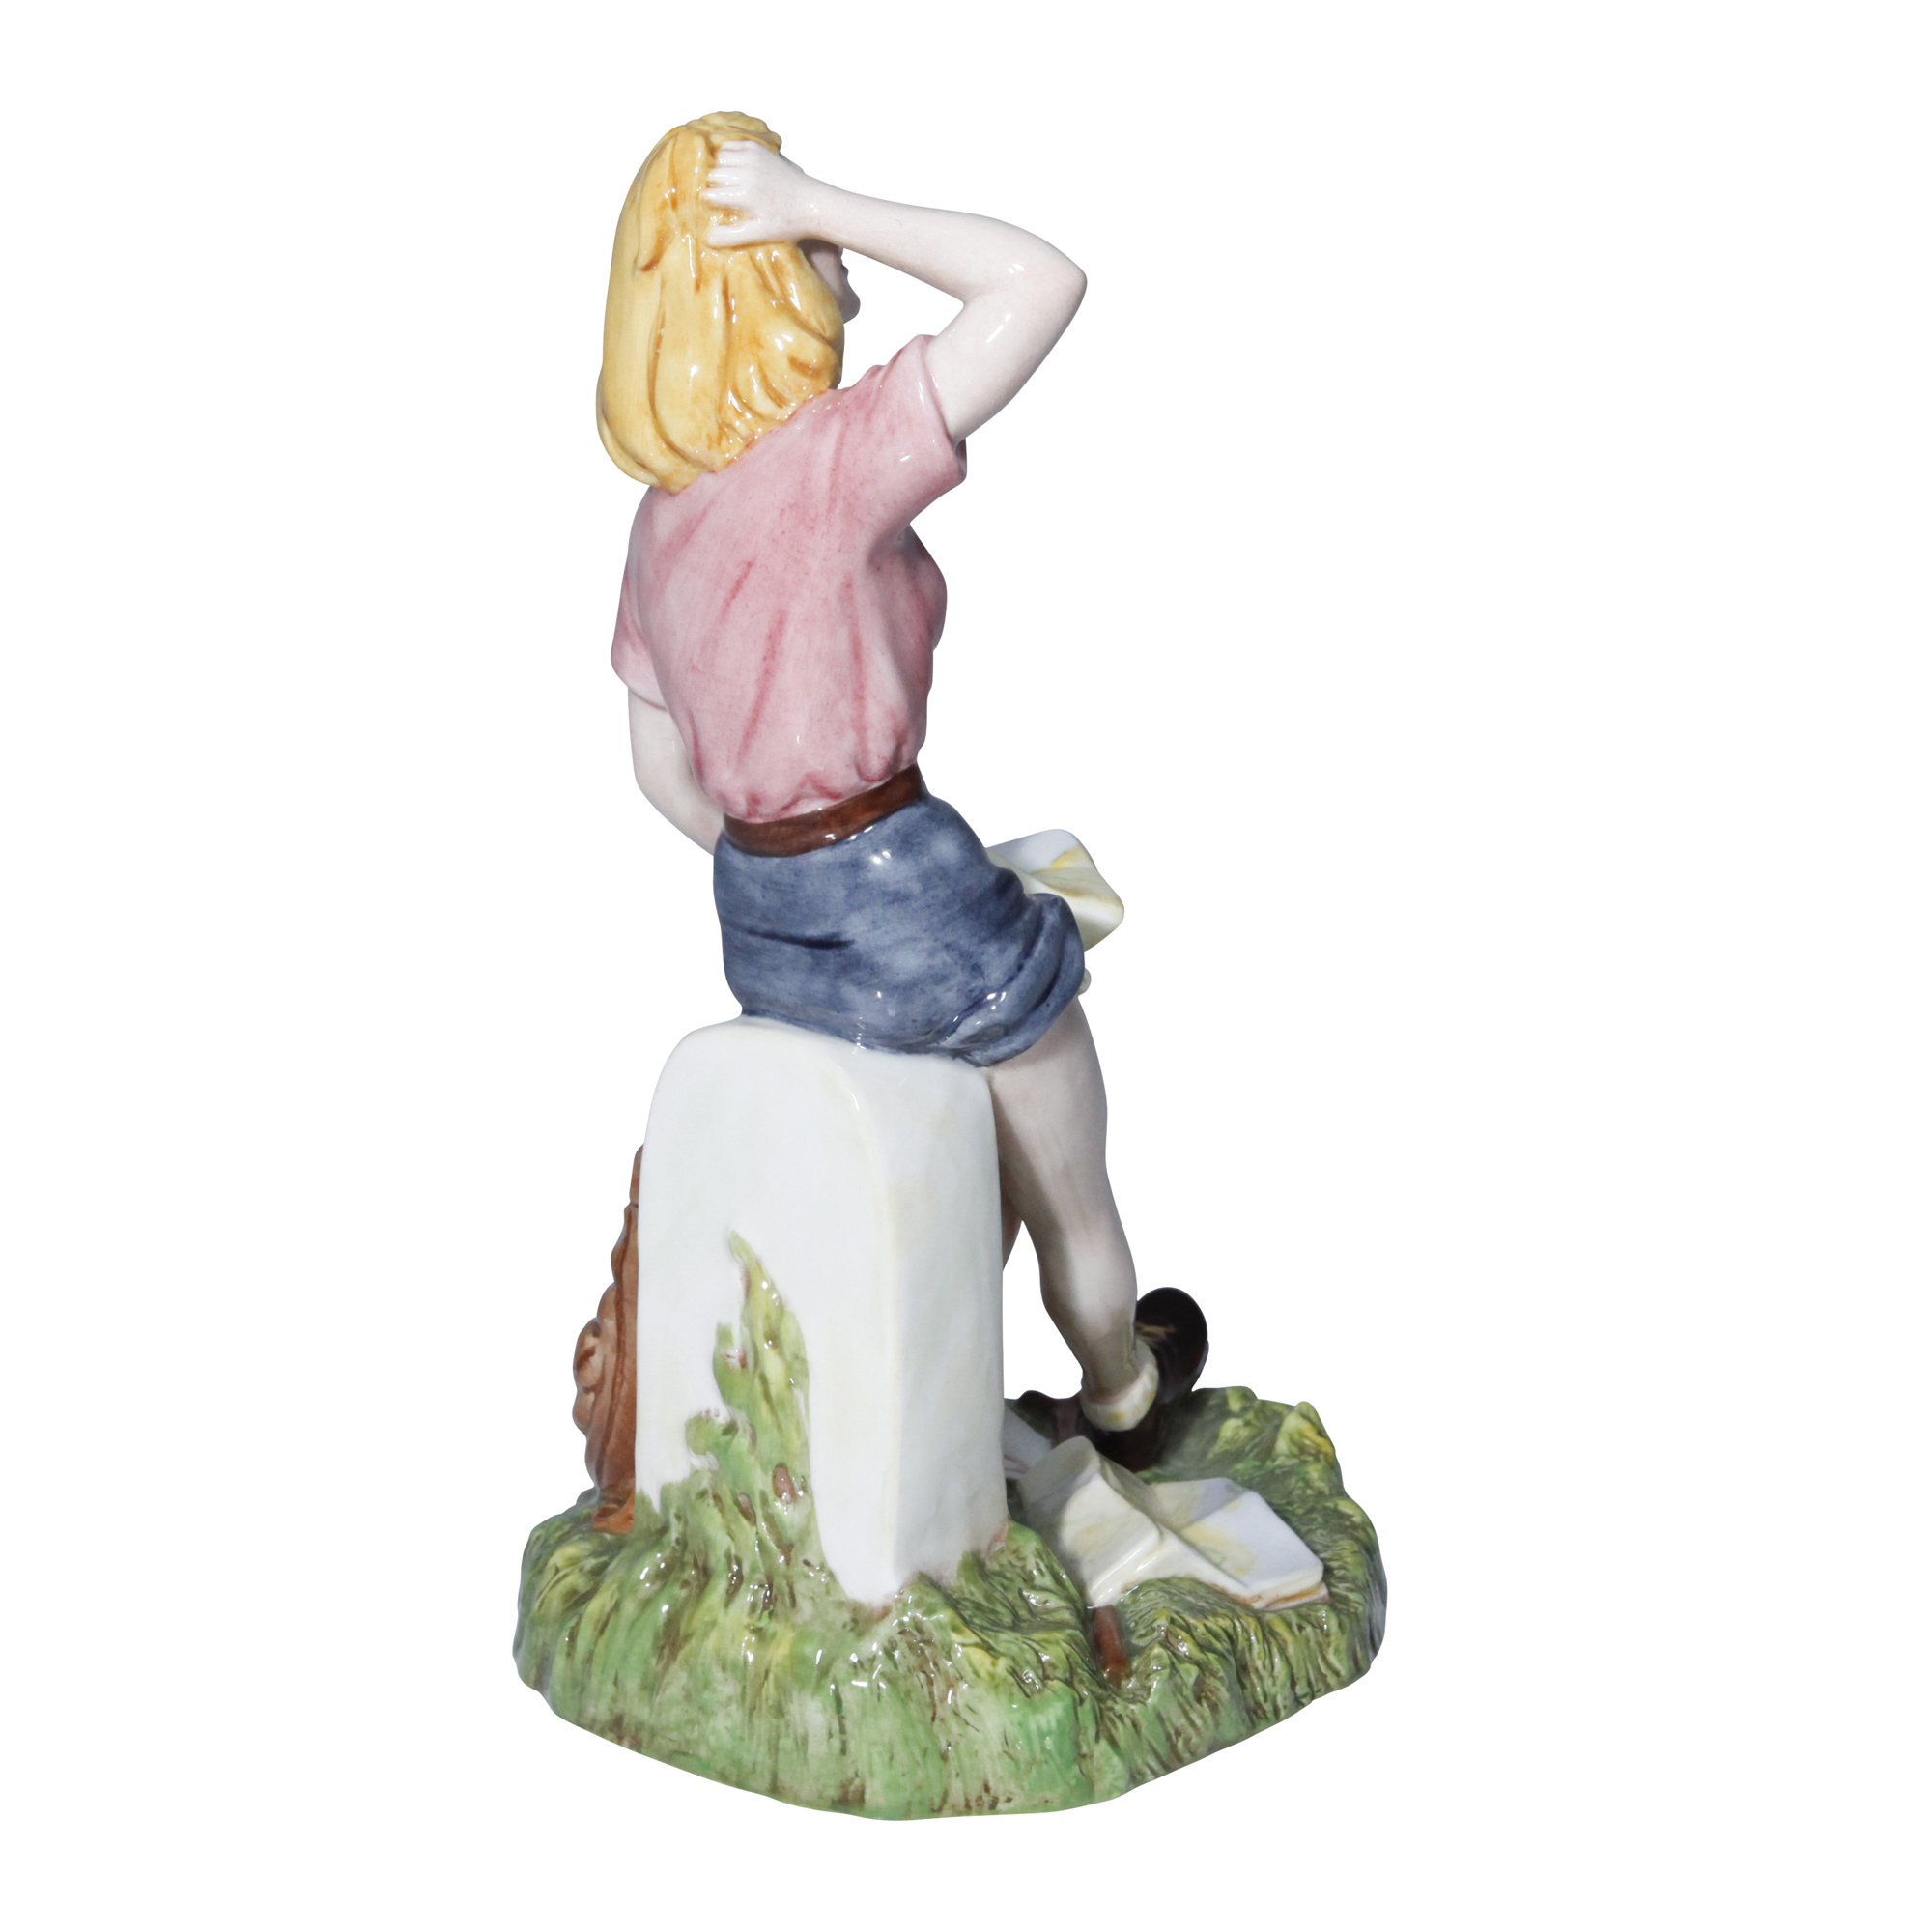 Woman Hiker (Prototype)  Royal Doulton Figurine